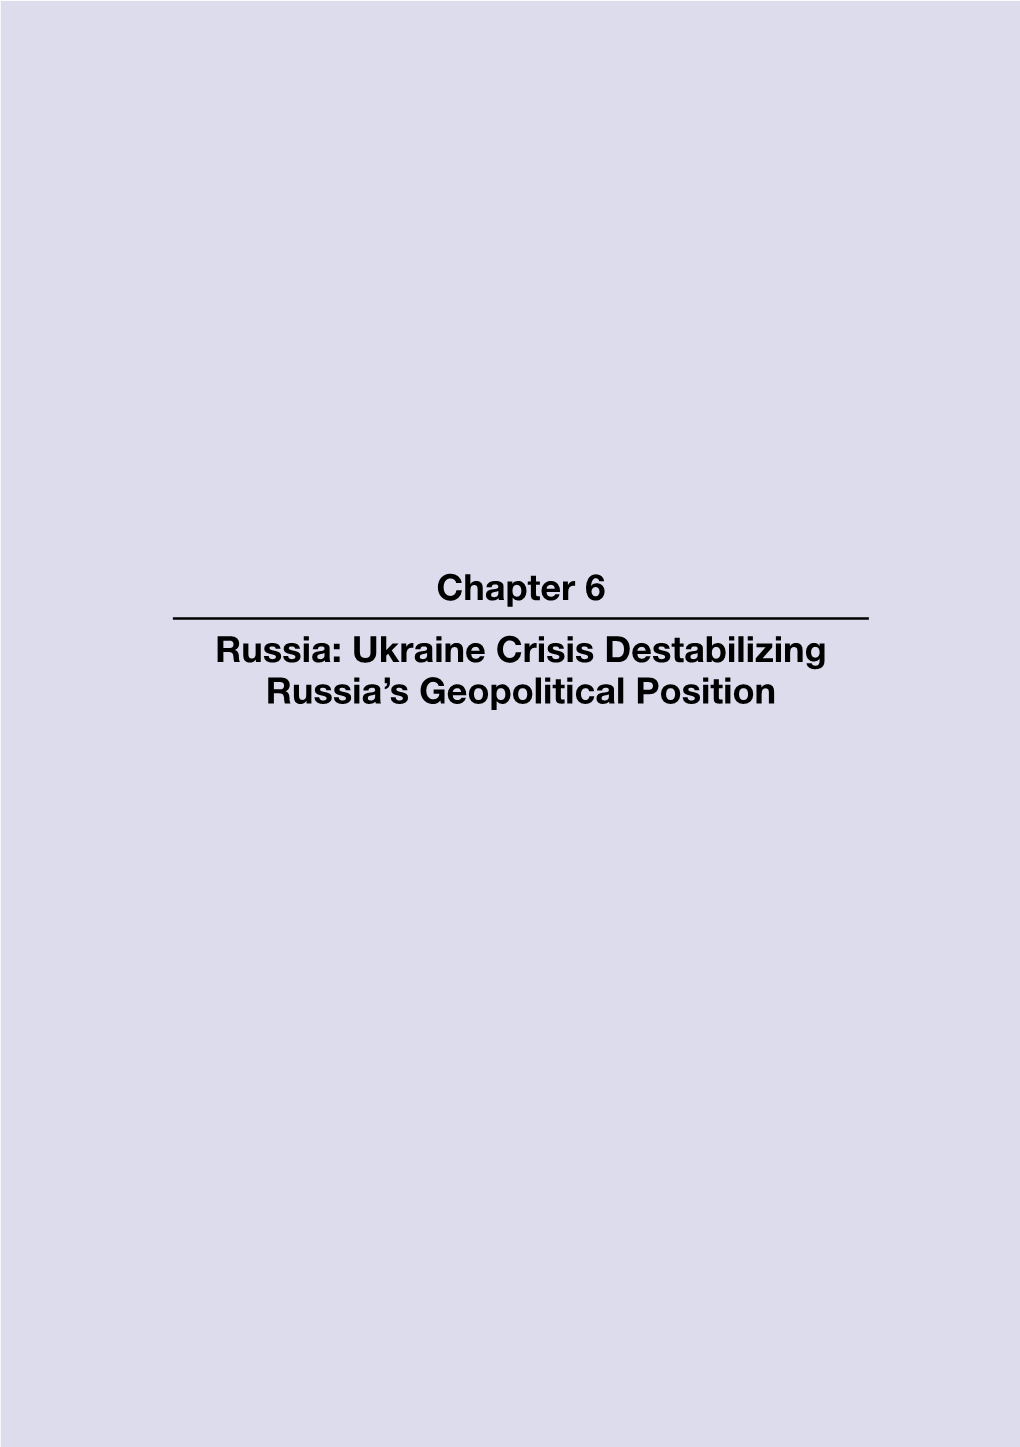 Chapter 6 Russia: Ukraine Crisis Destabilizing Russia's Geopolitical